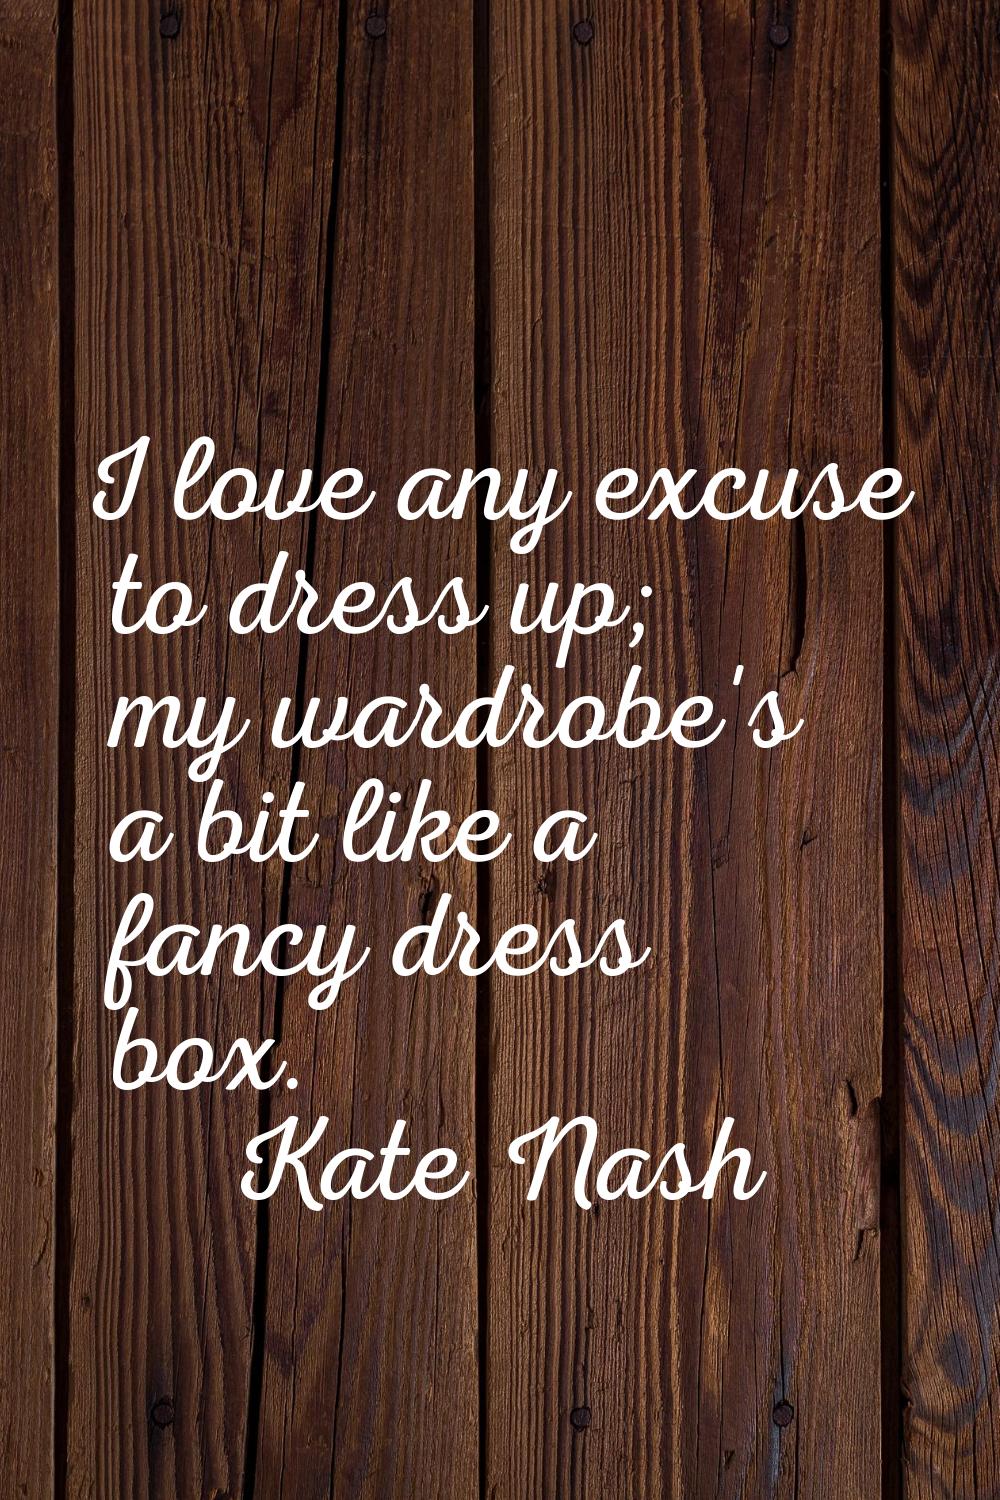 I love any excuse to dress up; my wardrobe's a bit like a fancy dress box.